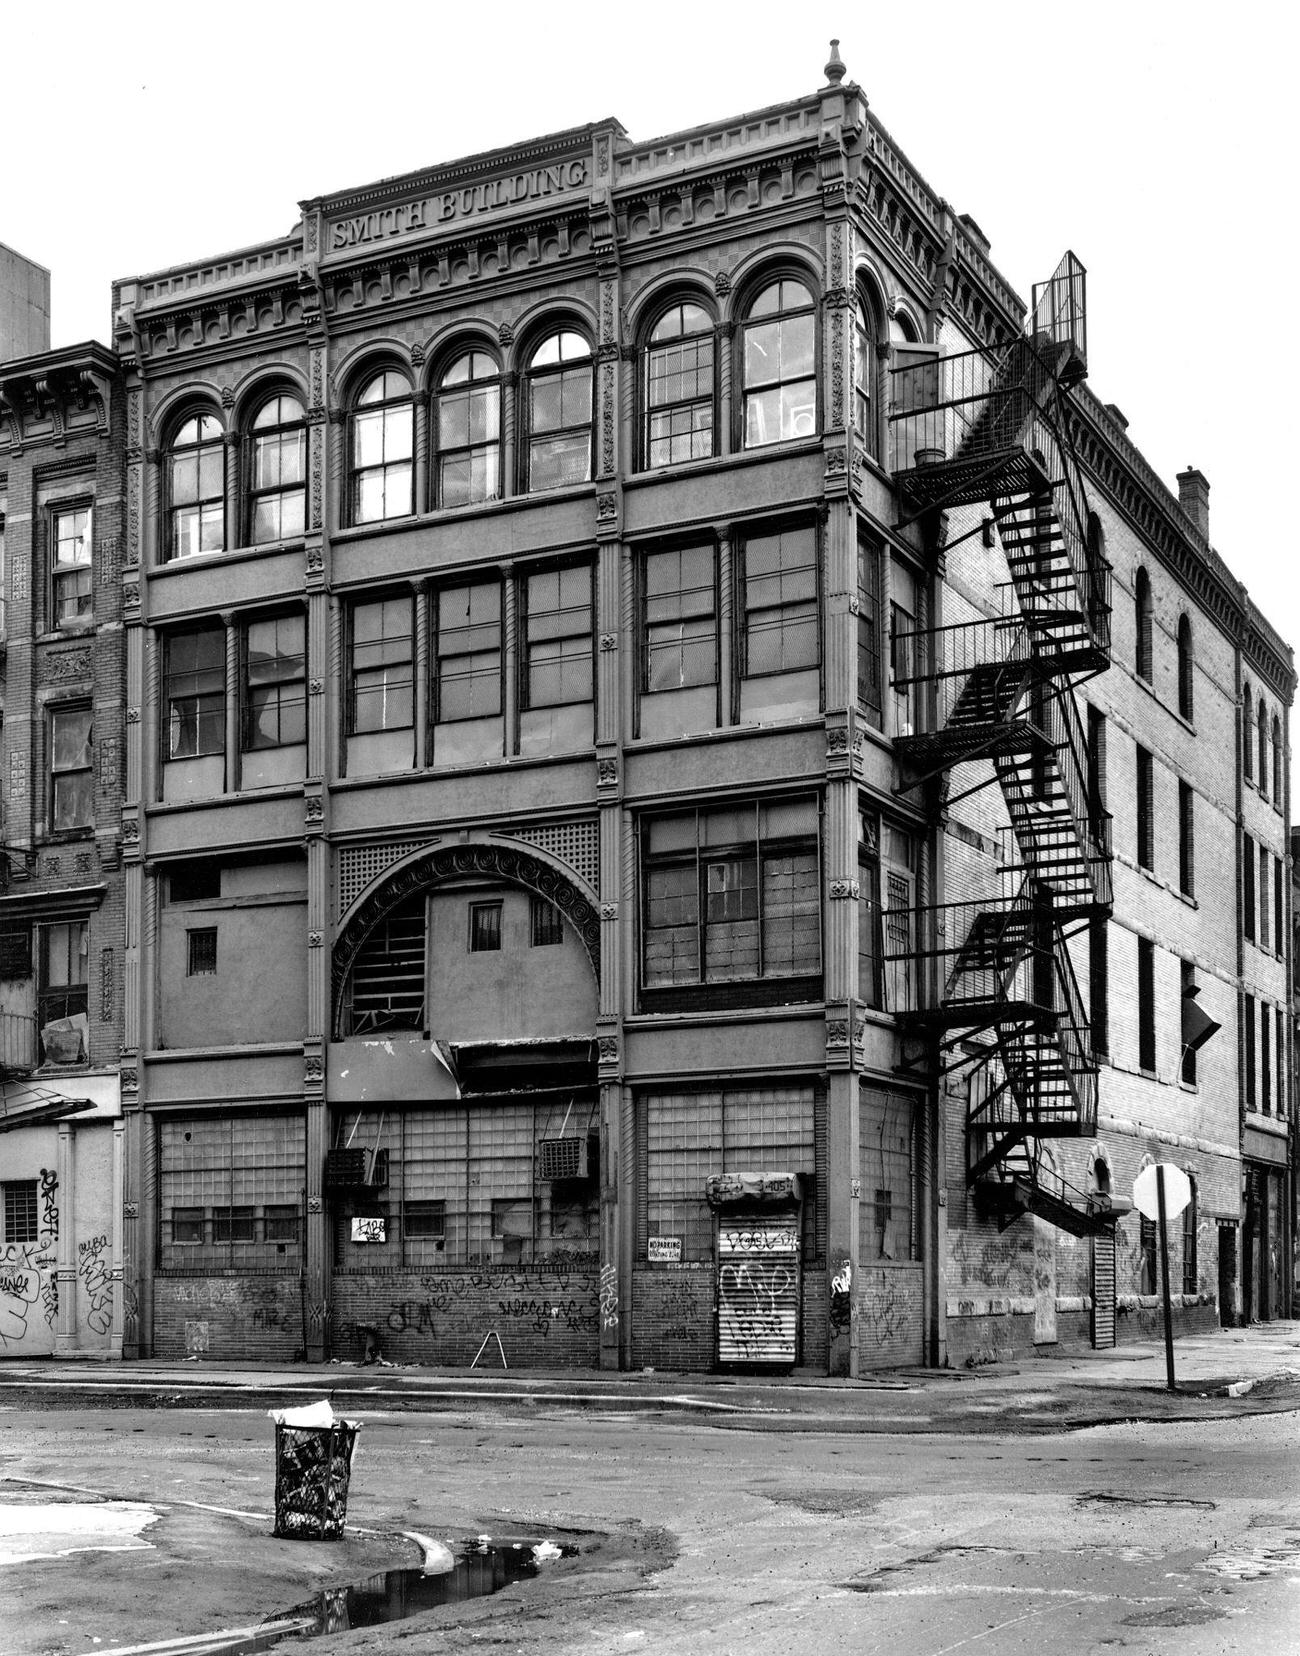 Smith Building With Fire Escape In Williamsburg, Brooklyn, 1991